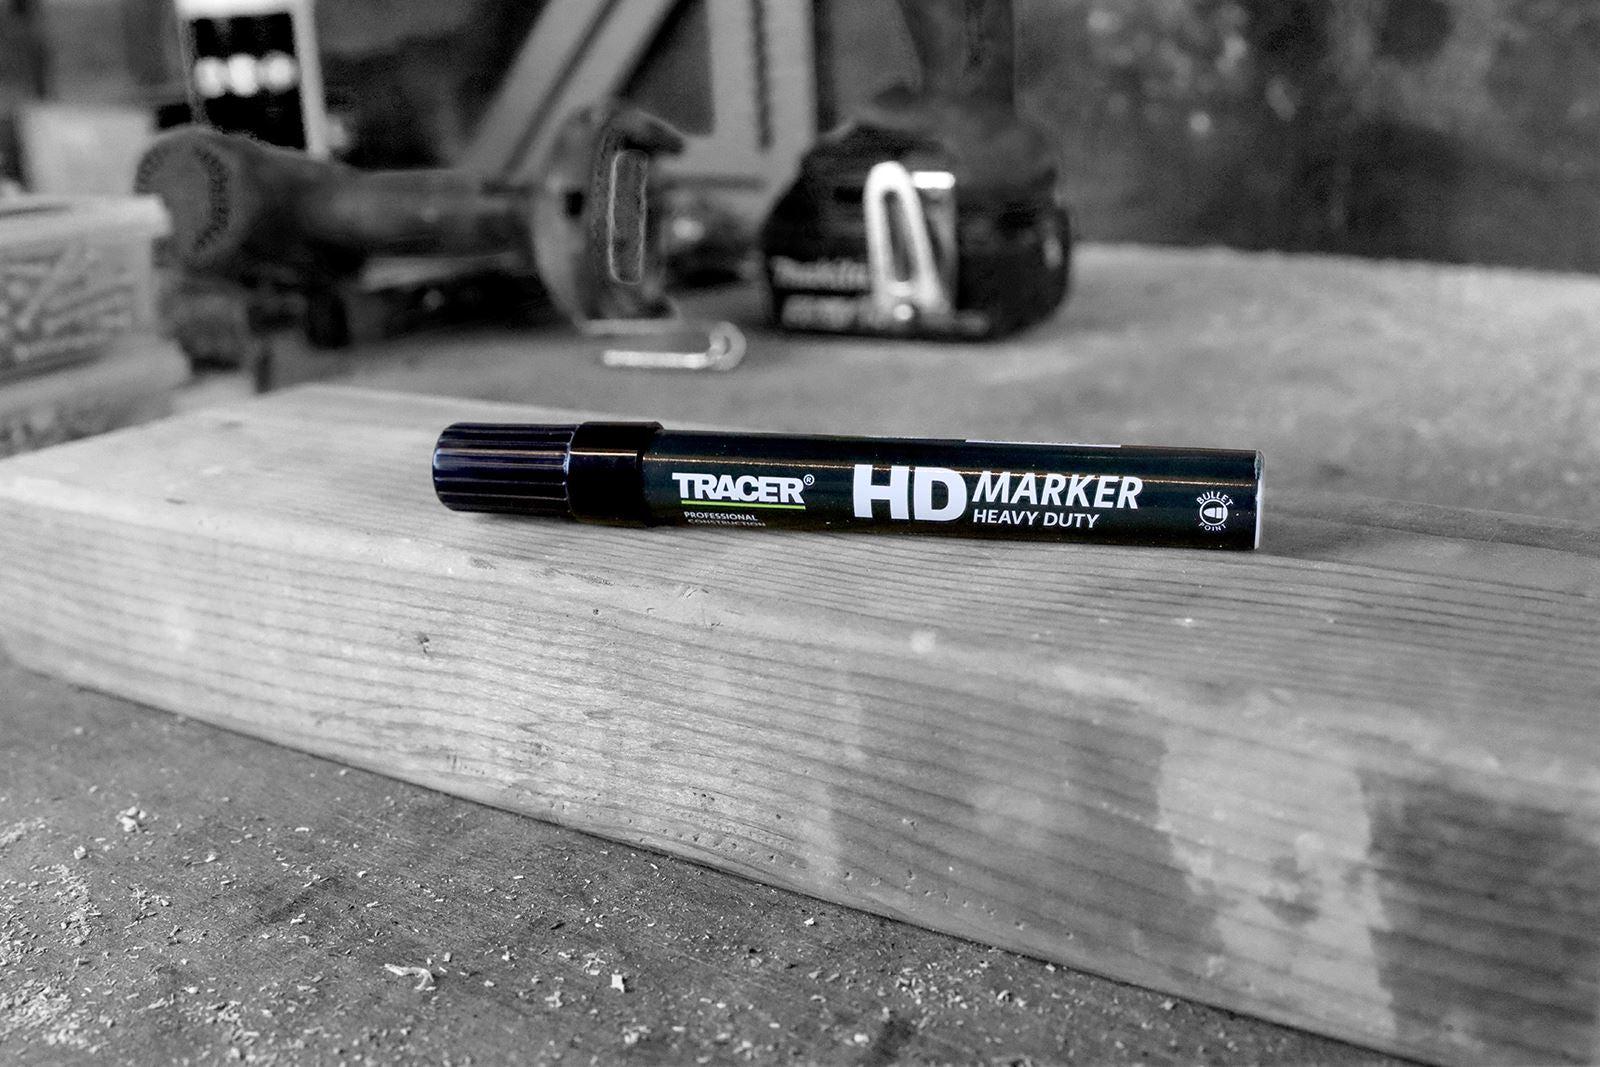 TRACER Heavy Duty Permanent Marker Pen Black 1-3mm Bullet Point